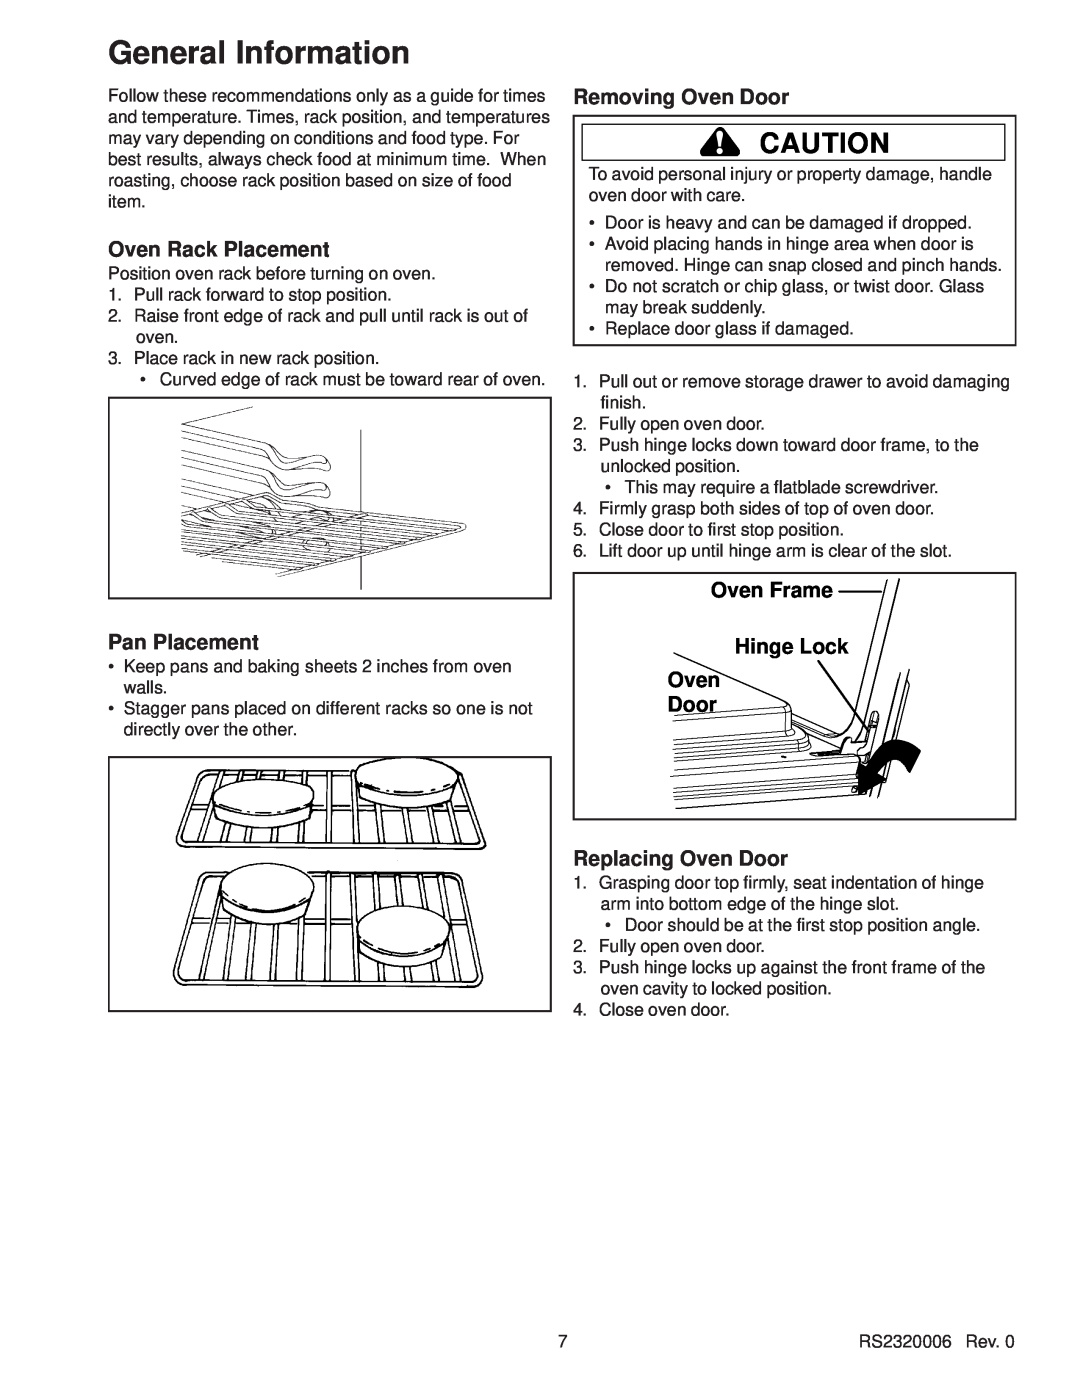 Amana RS2320006 service manual Oven Rack Placement, Pan Placement, Removing Oven Door, Oven Frame Hinge Lock Oven Door 